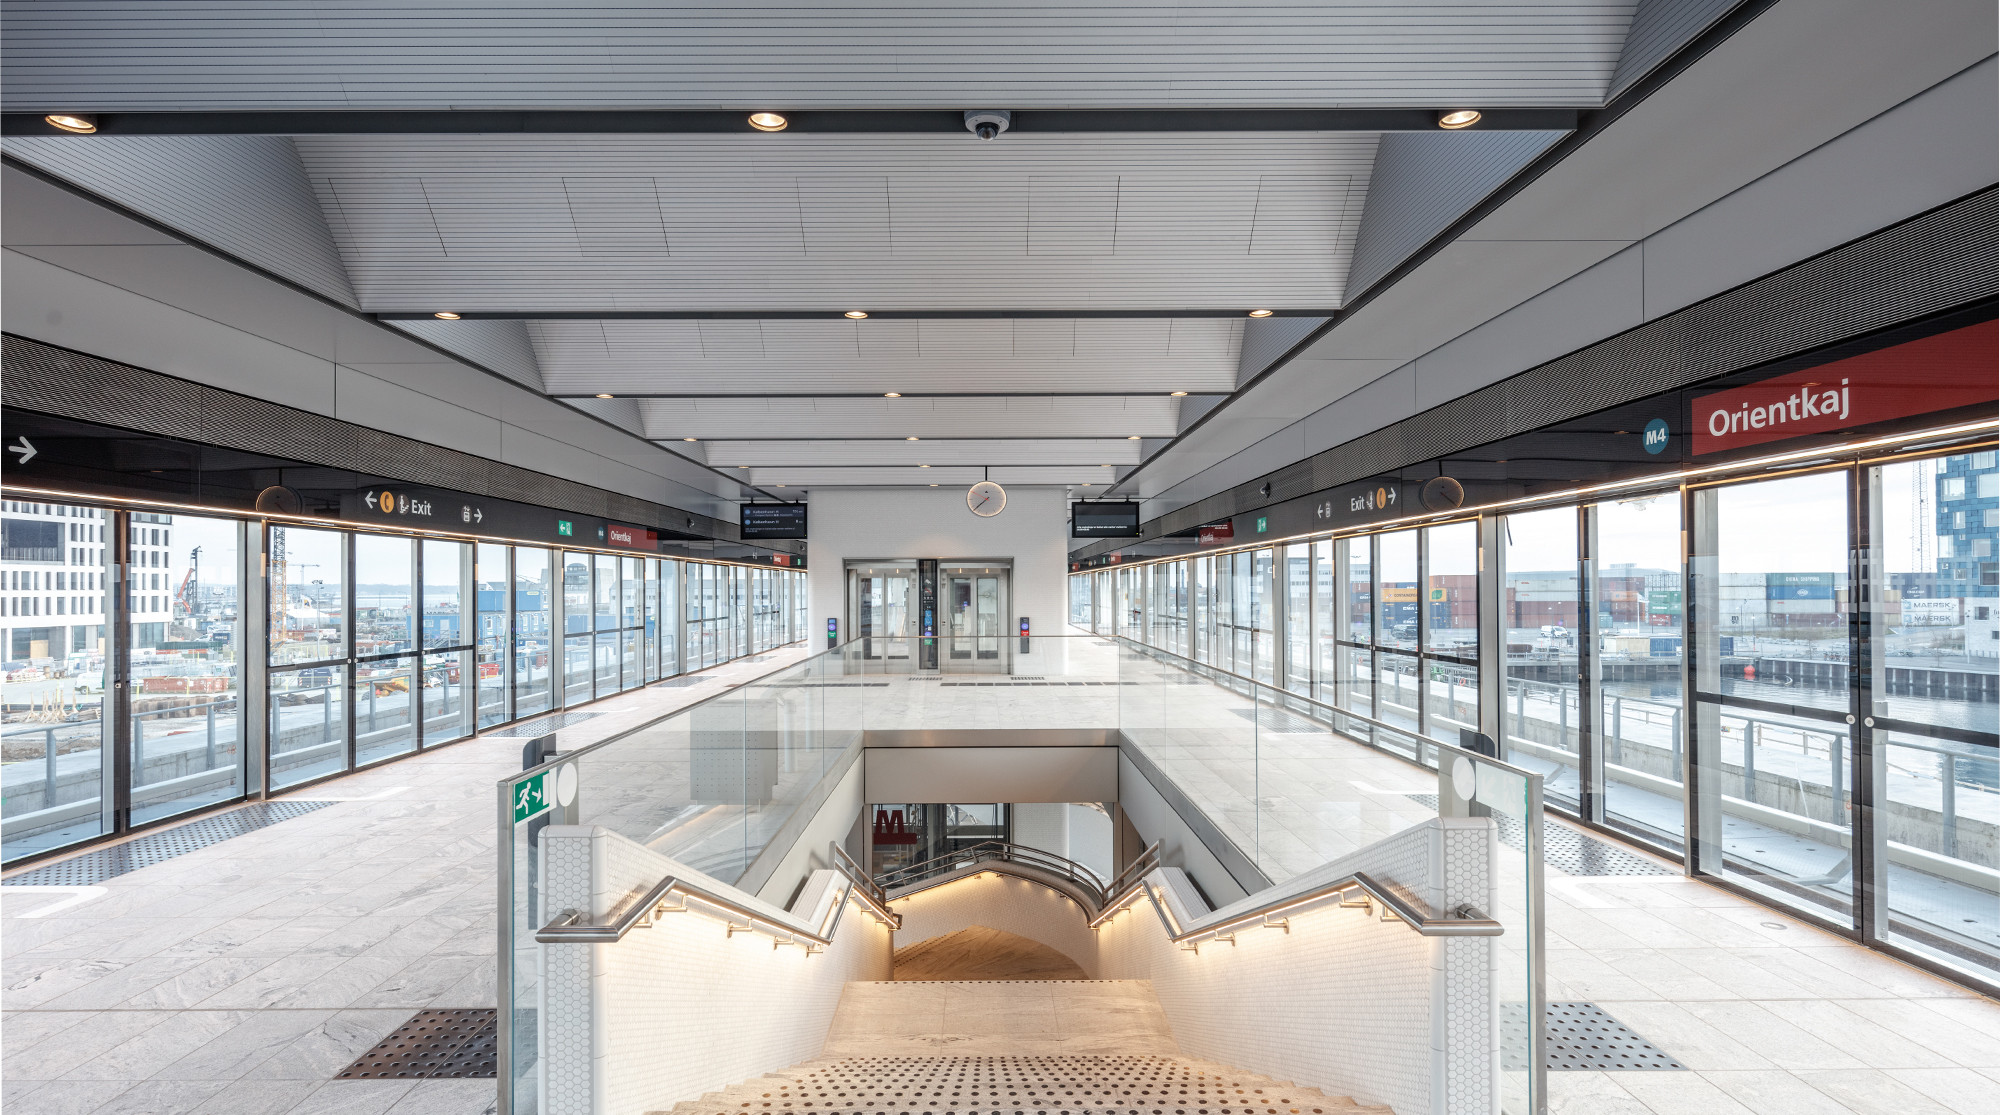 Orientkaj Metro Station / Cobe + Arup. Photo © Rasmus Hjortshøj - COAST